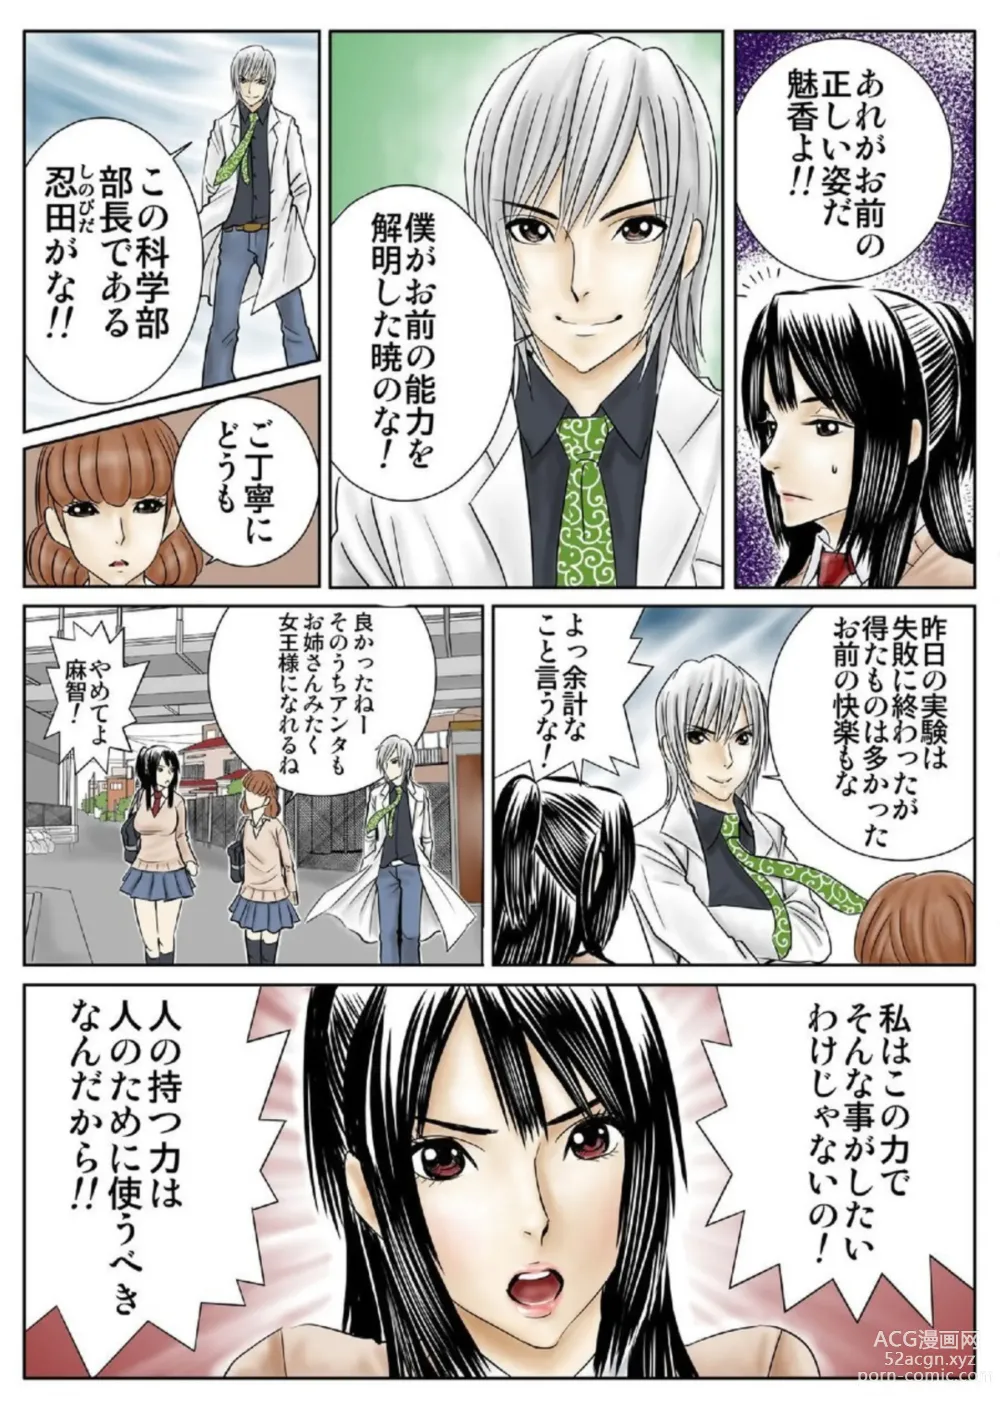 Page 5 of manga Ganriki! Miryō no Hōkago 1